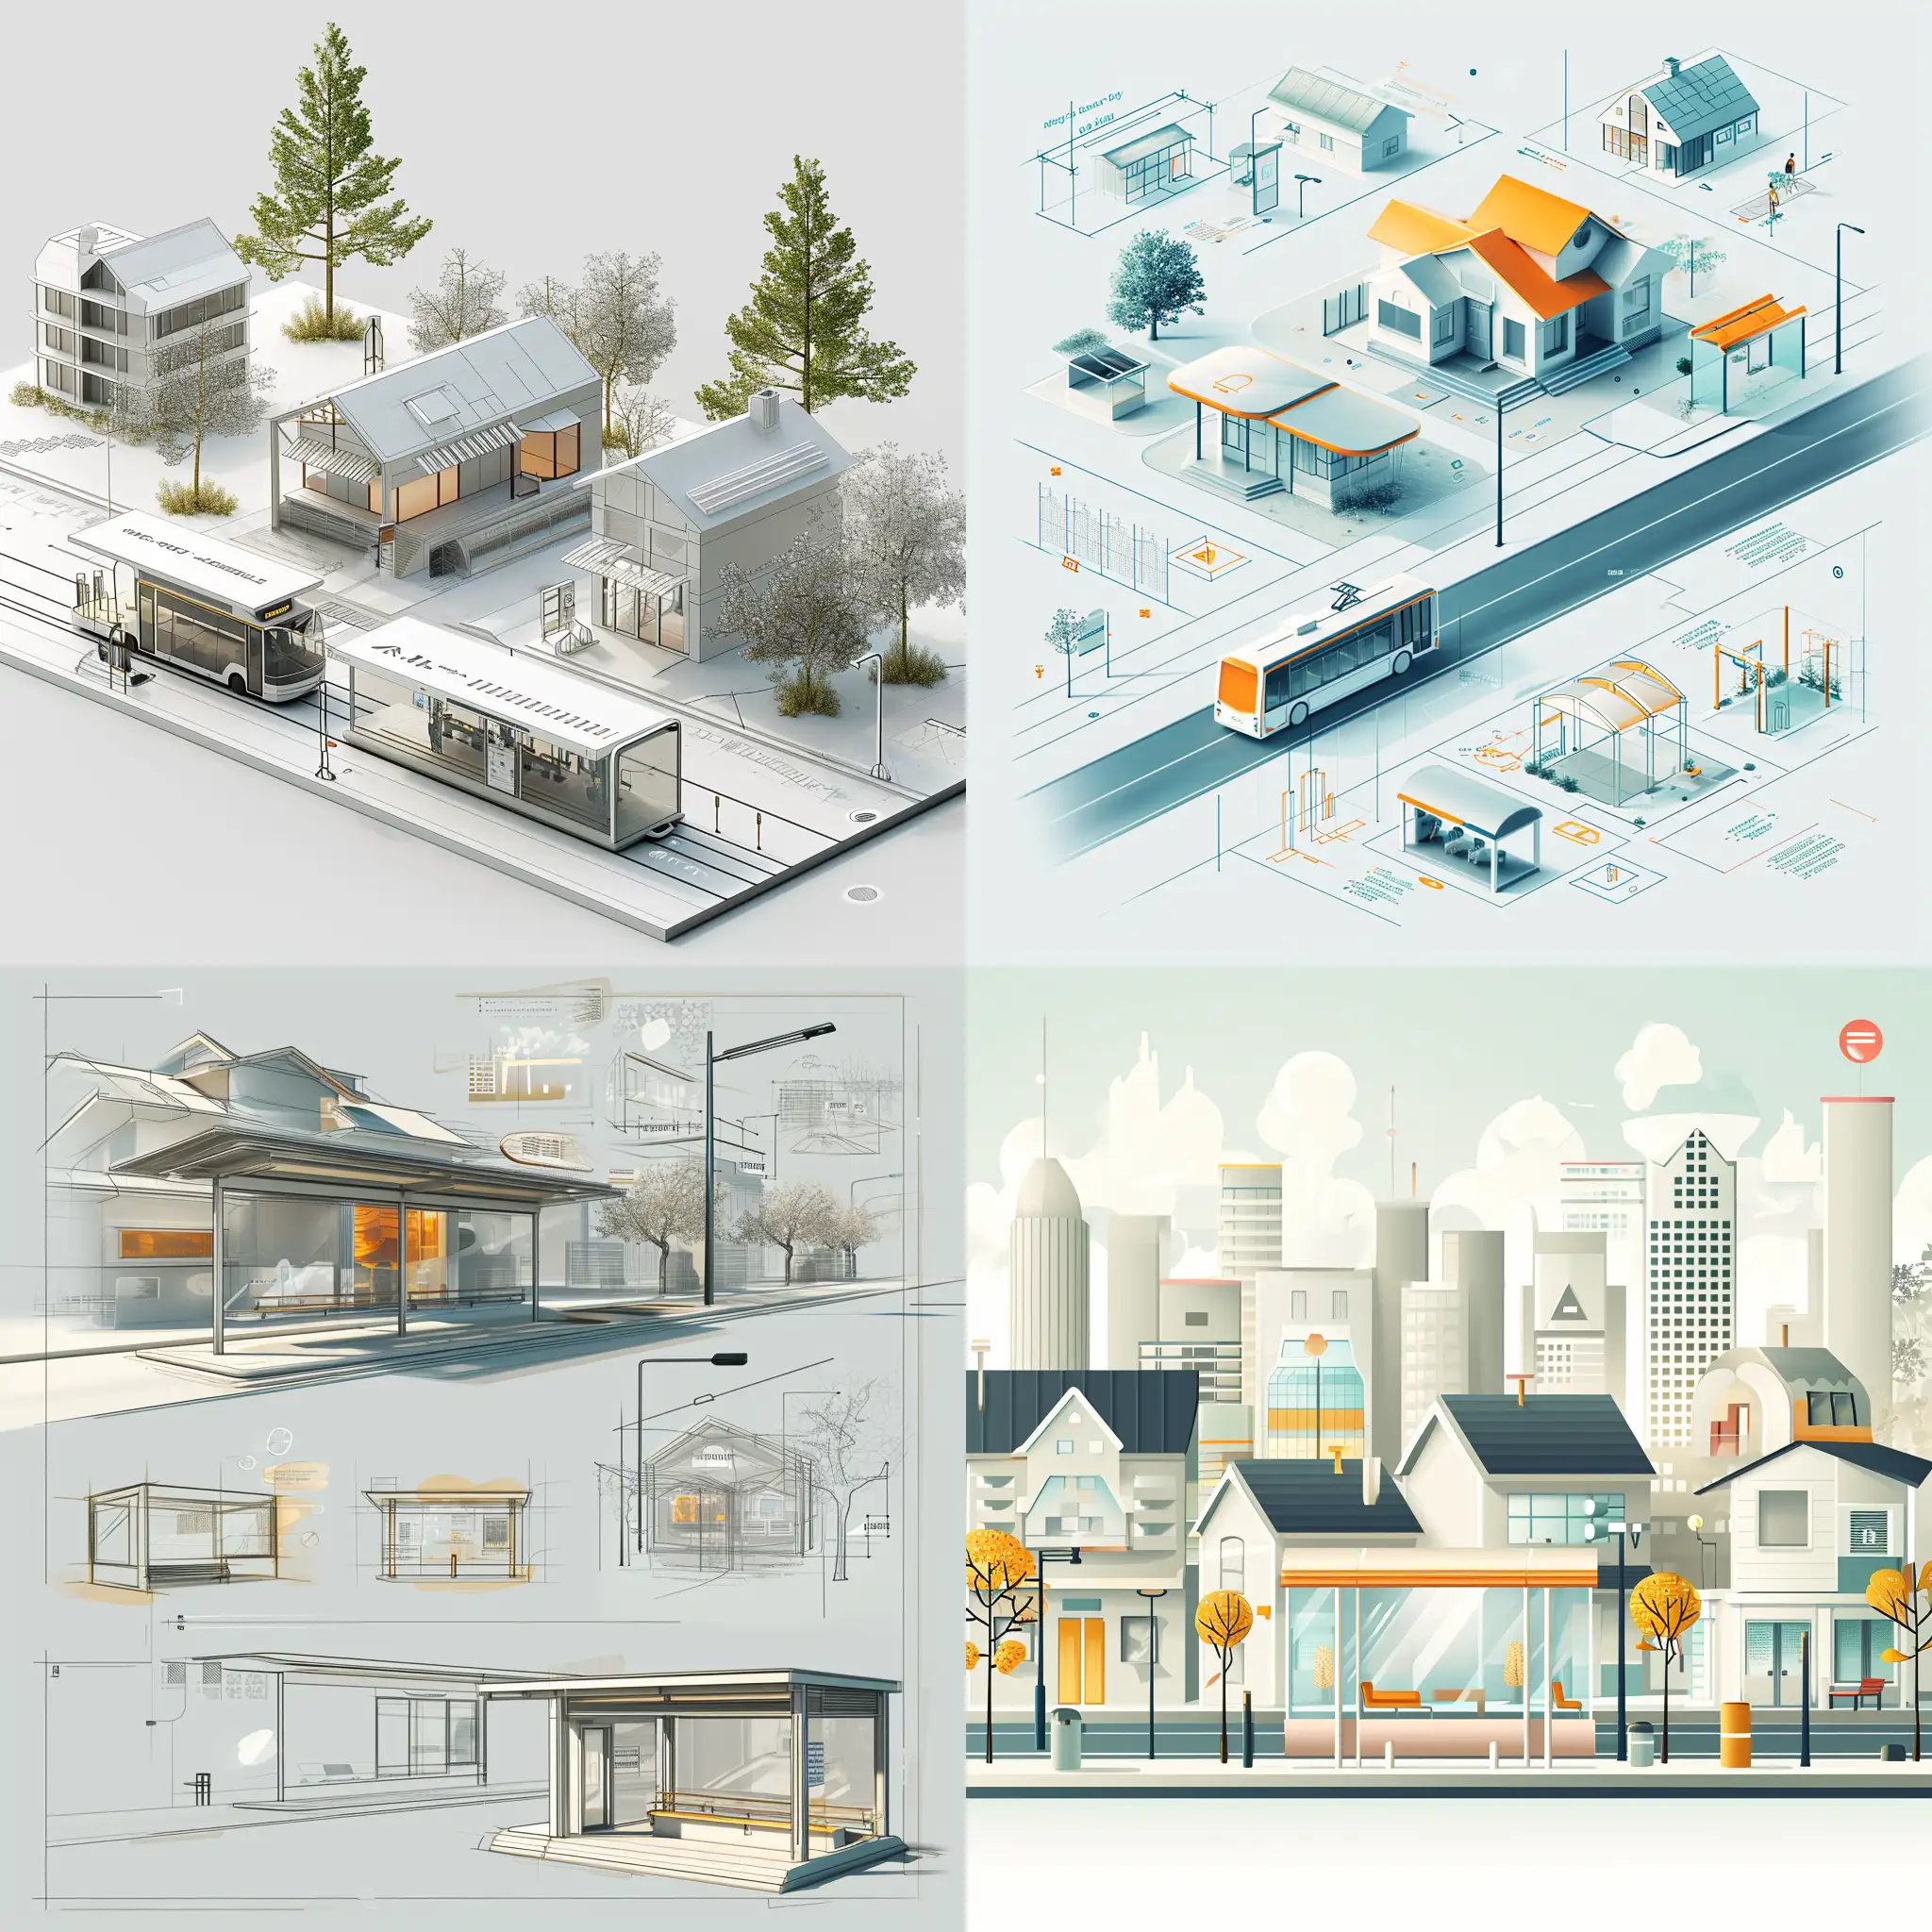 Futuristic-Urban-Planning-Presentation-HighQuality-Digital-City-Sketch-with-Calm-Colors